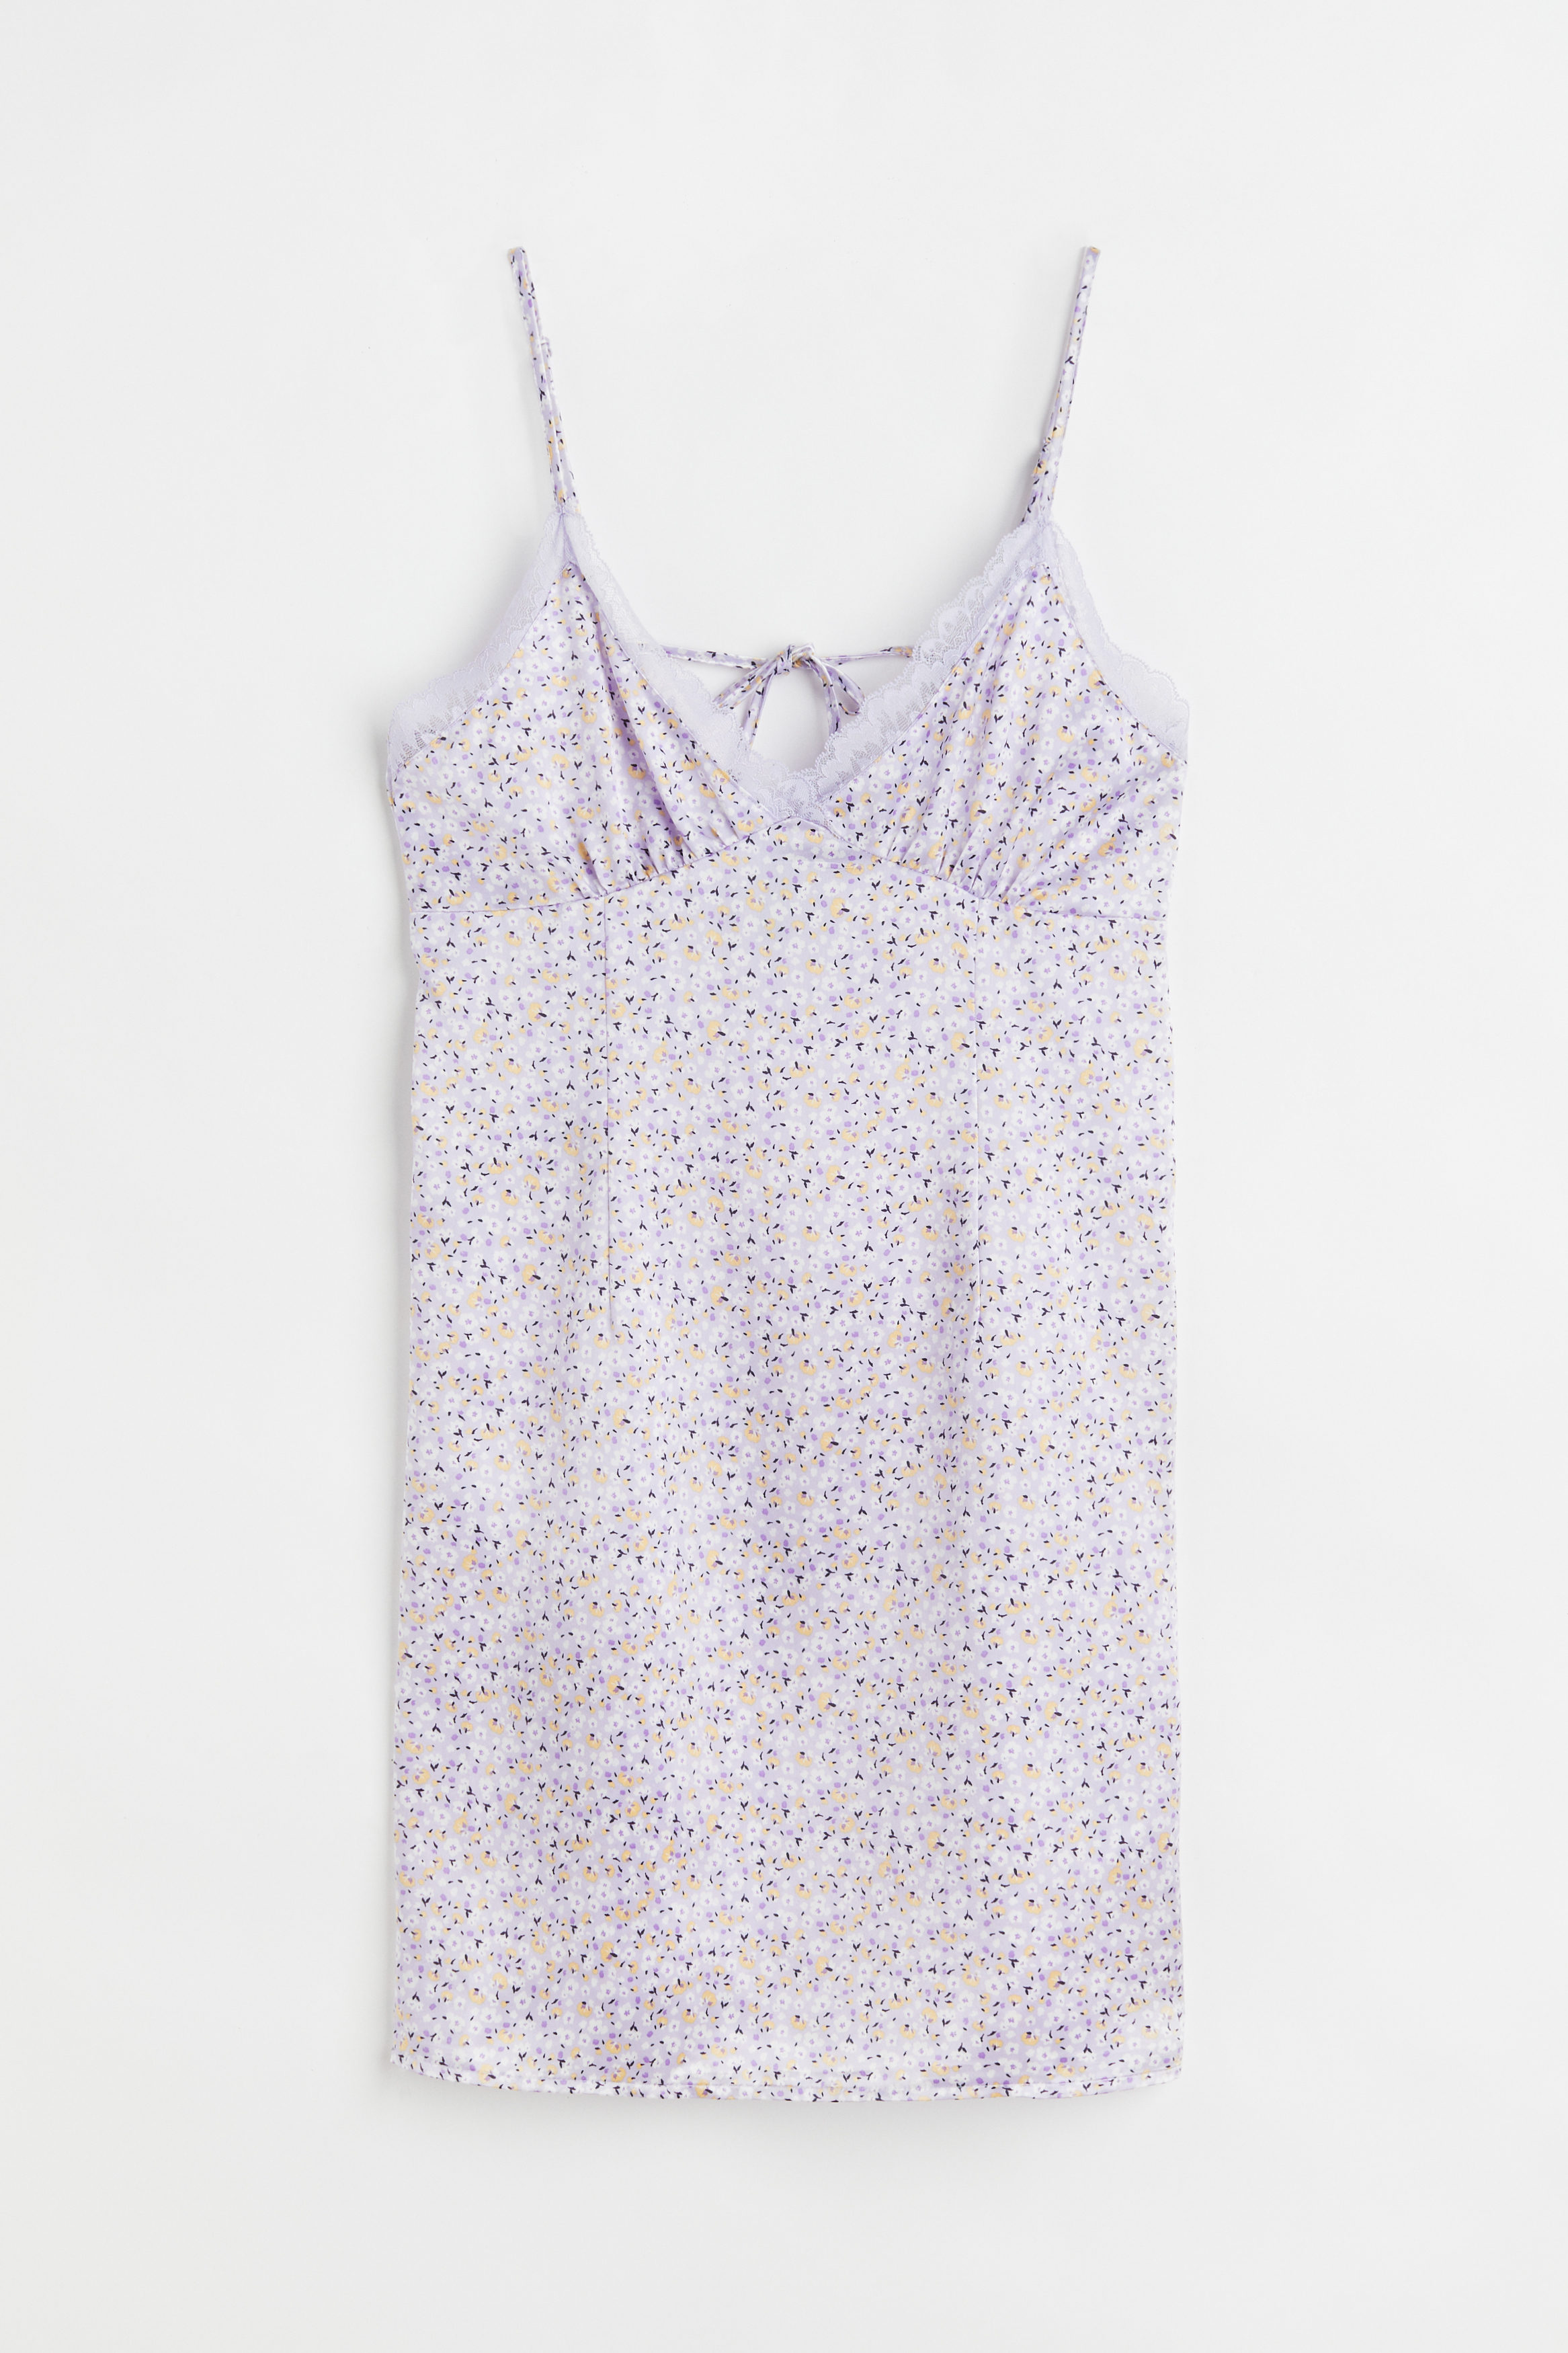 Billede af H&M Slip In-kjole I Satin Lyslilla/småblomstret, Festkjoler. Farve: Light purple/small flowers størrelse XL